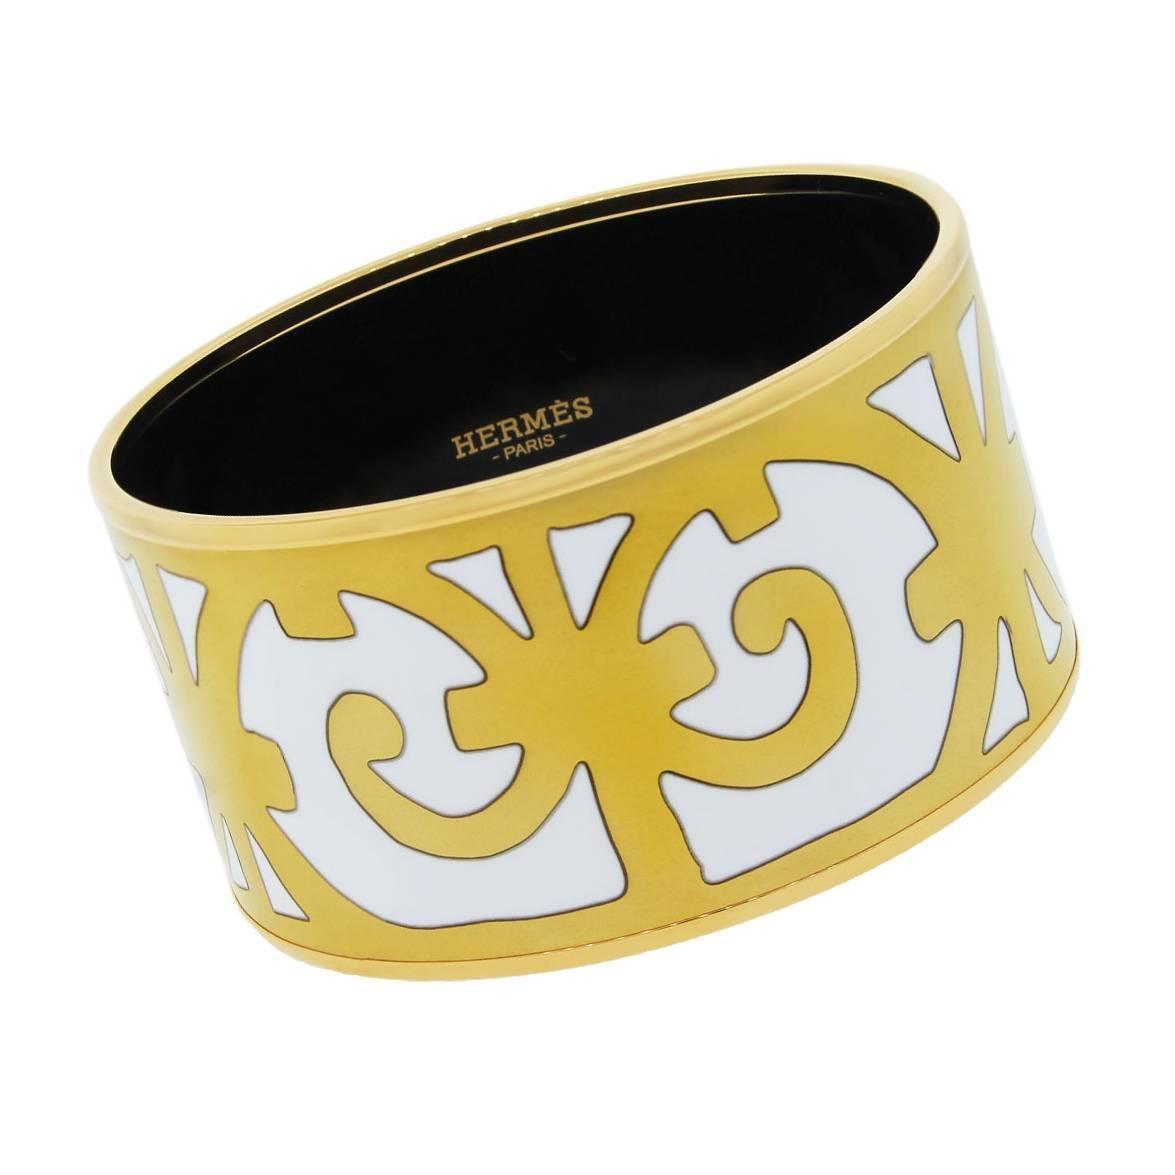 Hermes Gold Tone/White Extra Wide Enamel T Stamp Bangle Bracelet